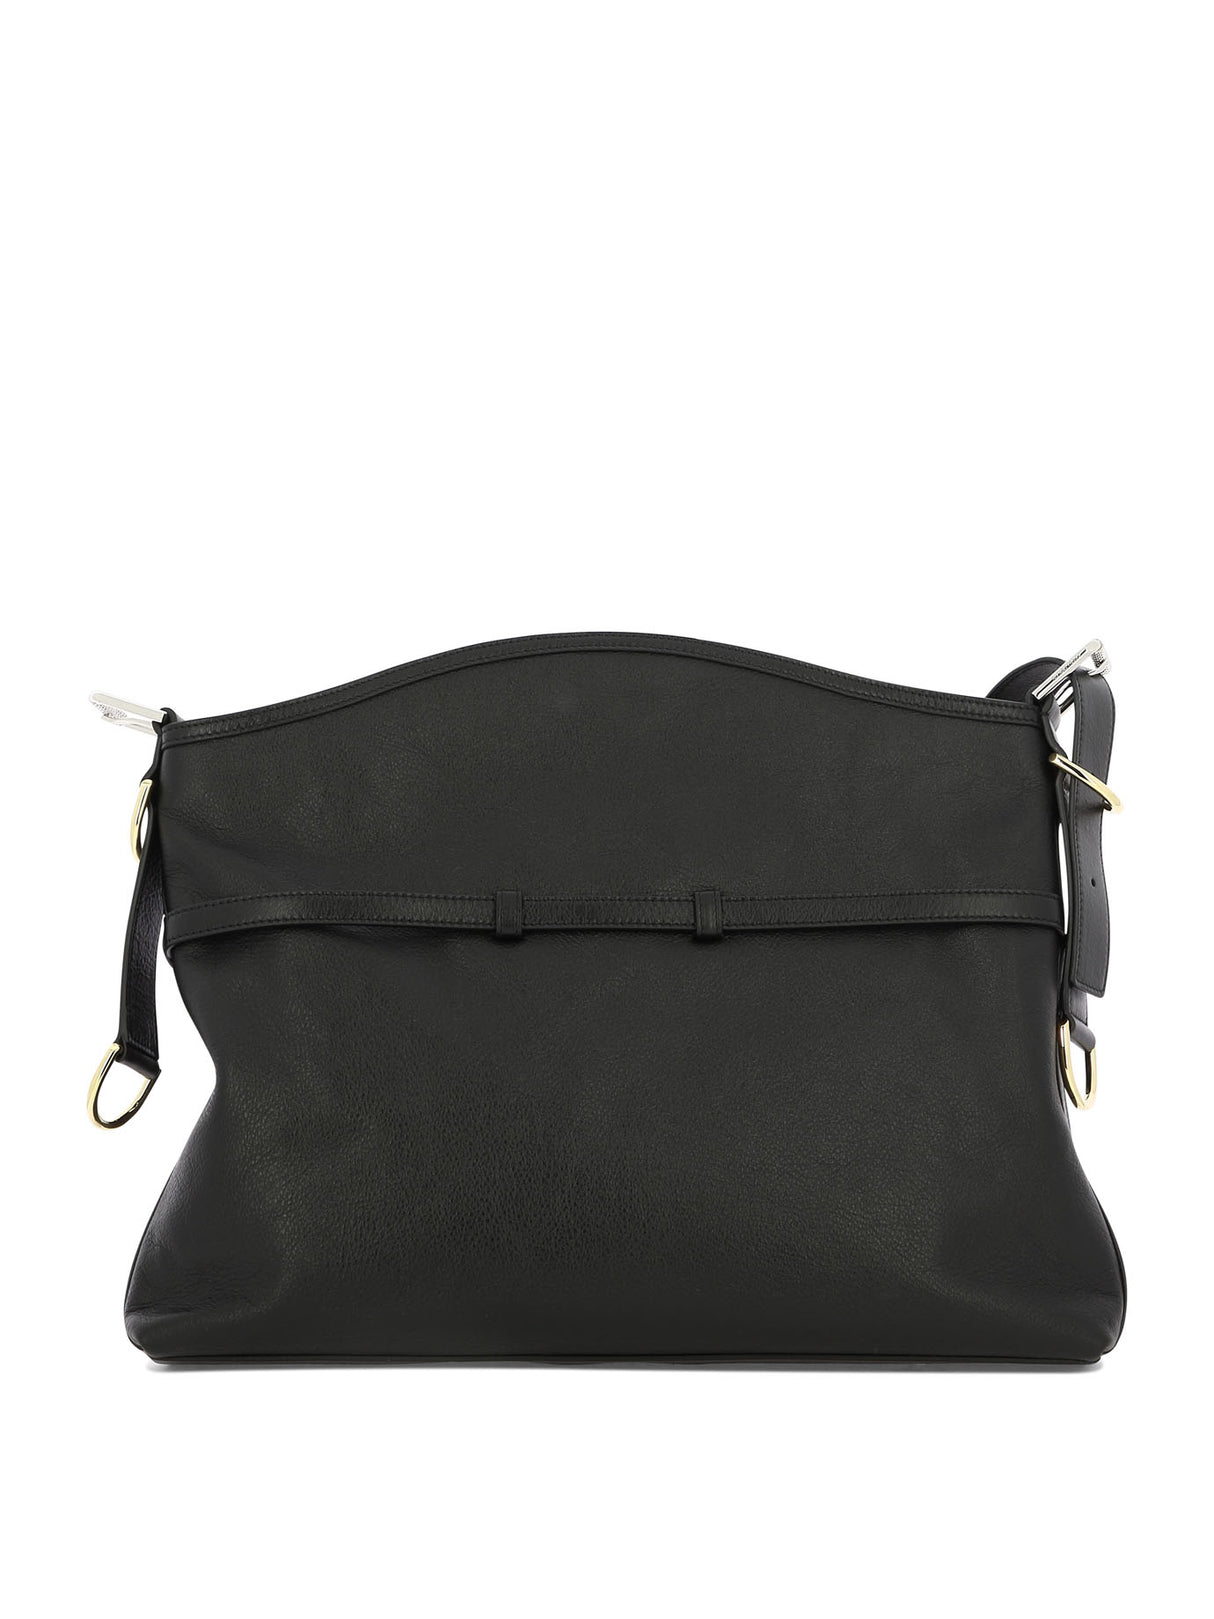 GIVENCHY Elegant Medium Voyou Black Leather Shoulder Bag with Metallic Accents - 40x27x6.5 cm